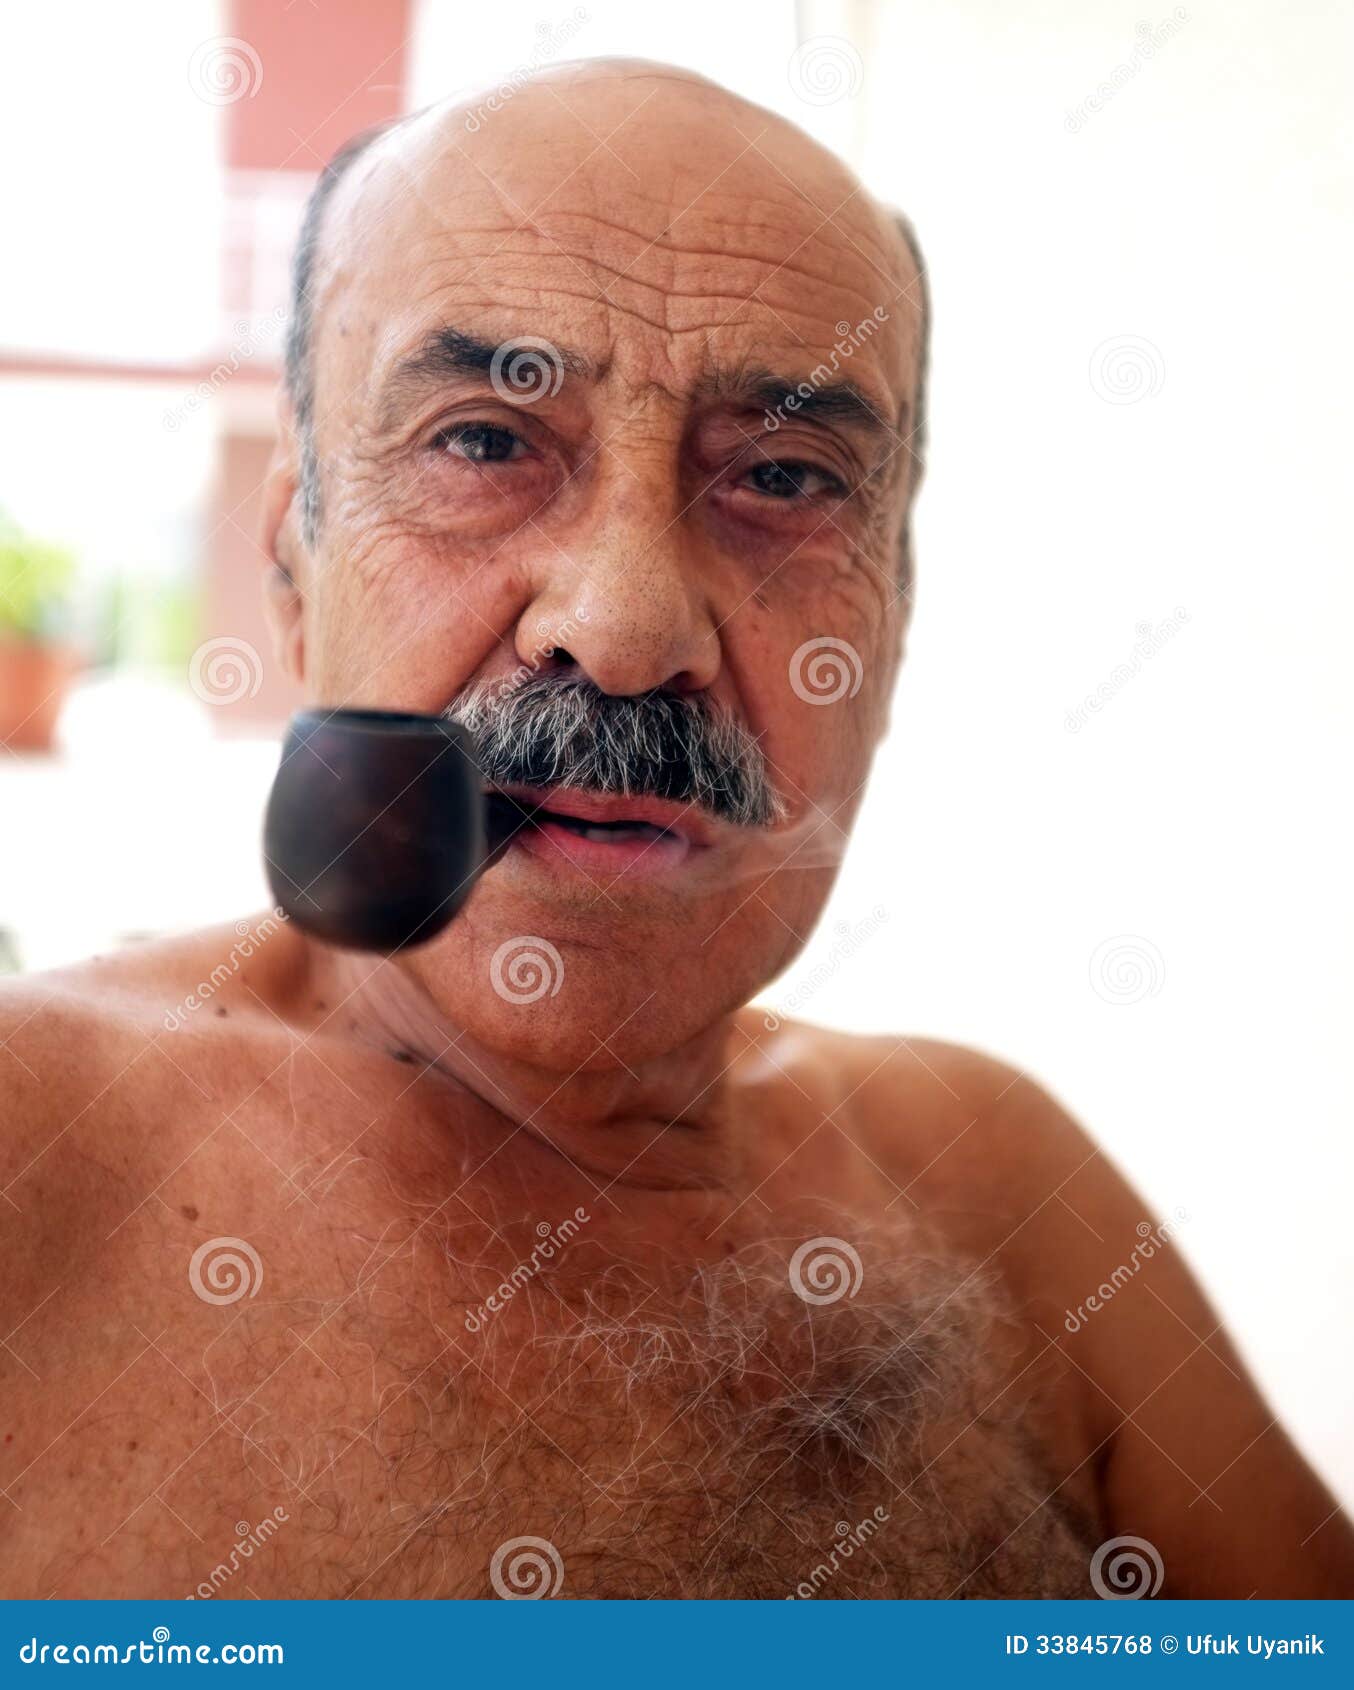 pipe-smoker-elderly-healthy-man-smoking-his-33845768.jpg